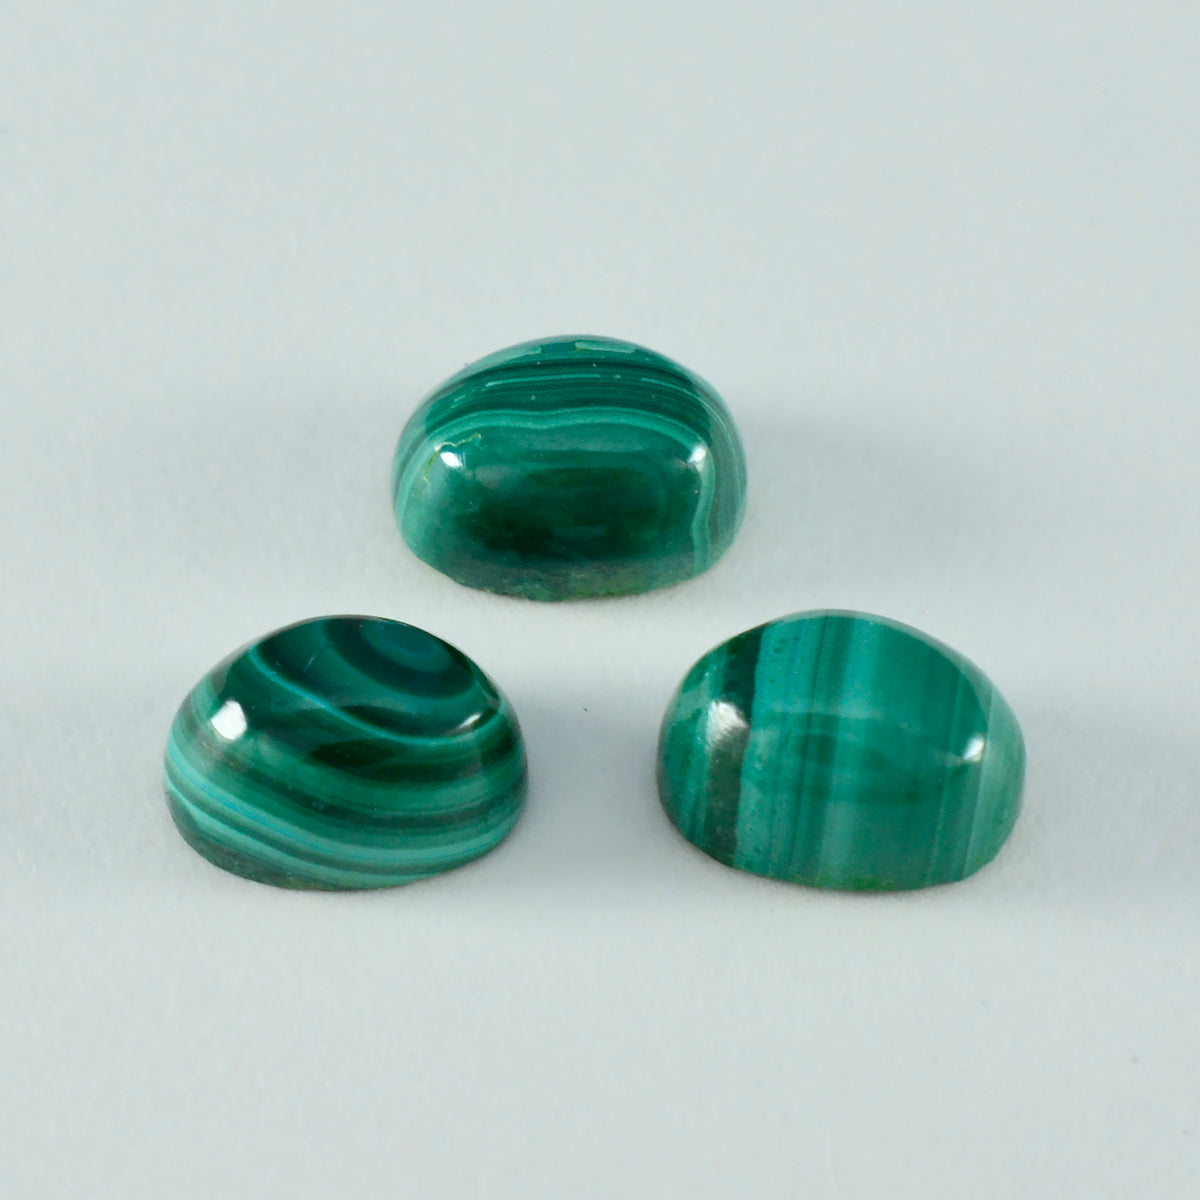 Riyogems 1PC Green Malachite Cabochon 3x5 mm Oval Shape wonderful Quality Loose Gemstone